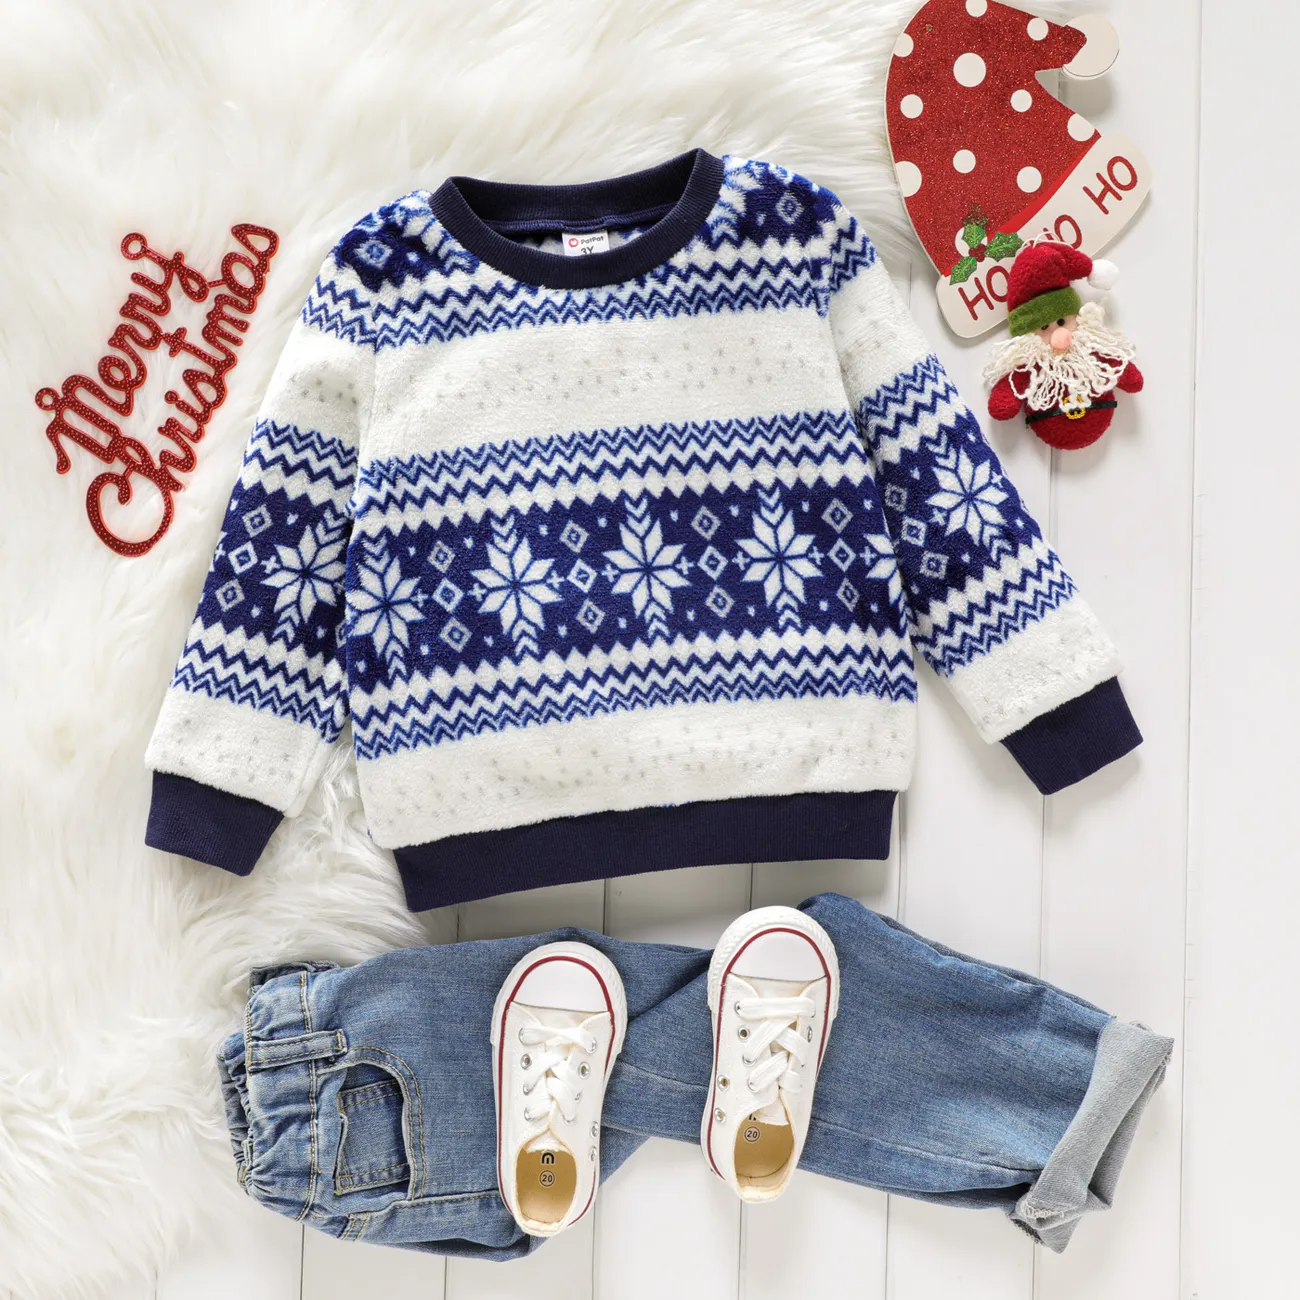 Toddler Boy/Girl Preppy style Snowflake Pattern Fleece Pullover Sweatshirt blueblack big image 1